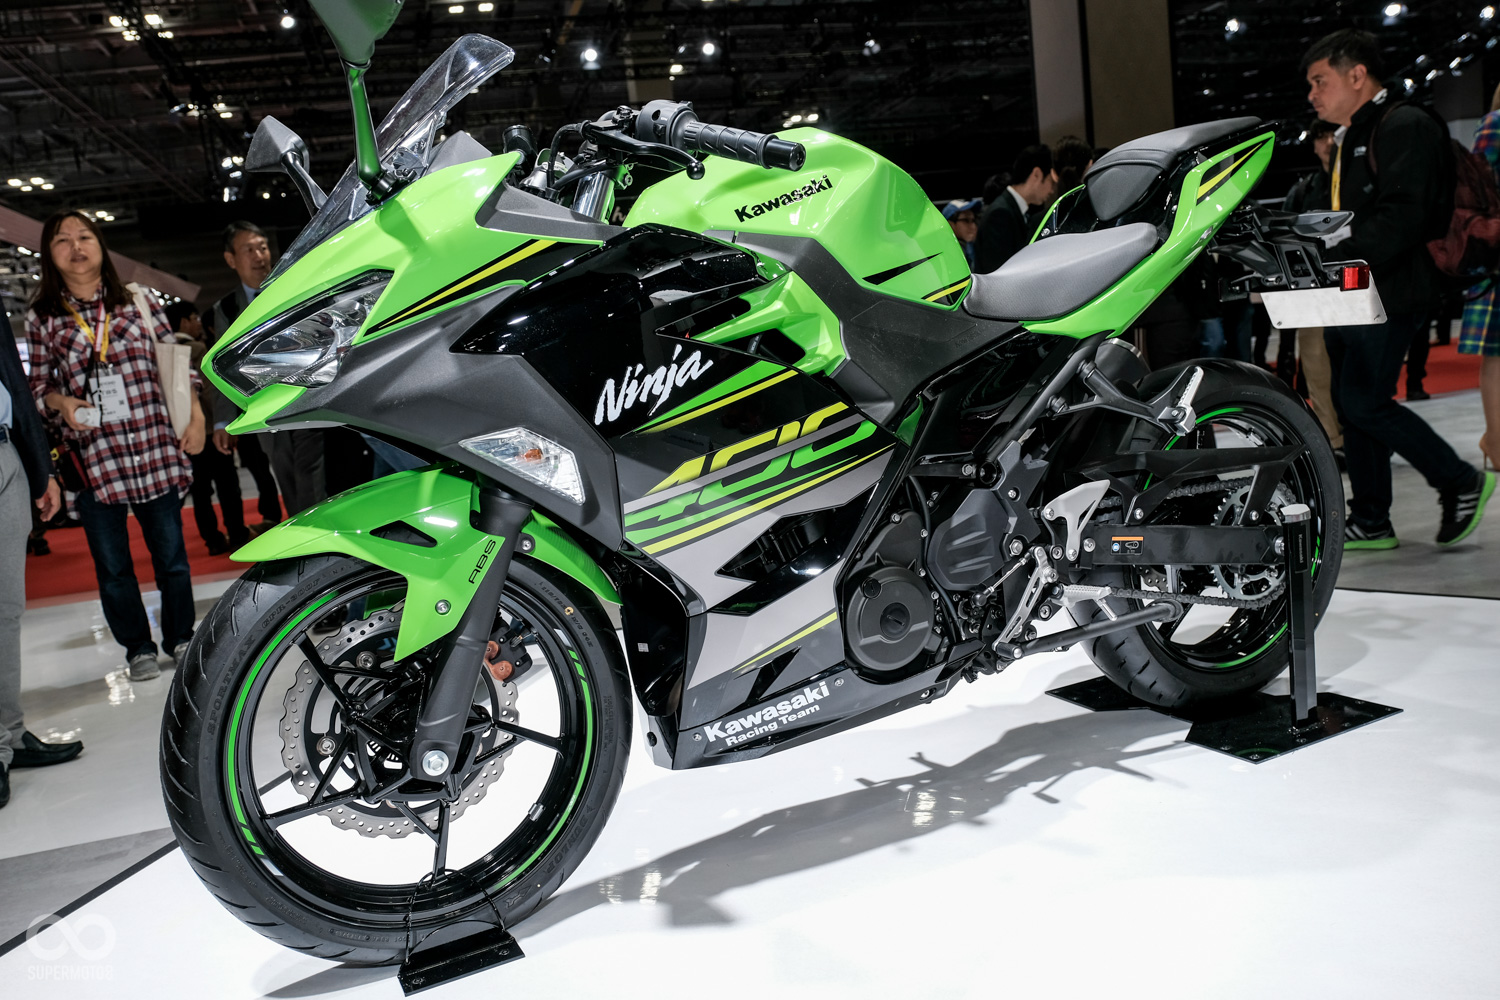 Мотоцикл Kawasaki Ninja (Кавасаки Ниндзя) 300 обзор: описание и технические характеристики